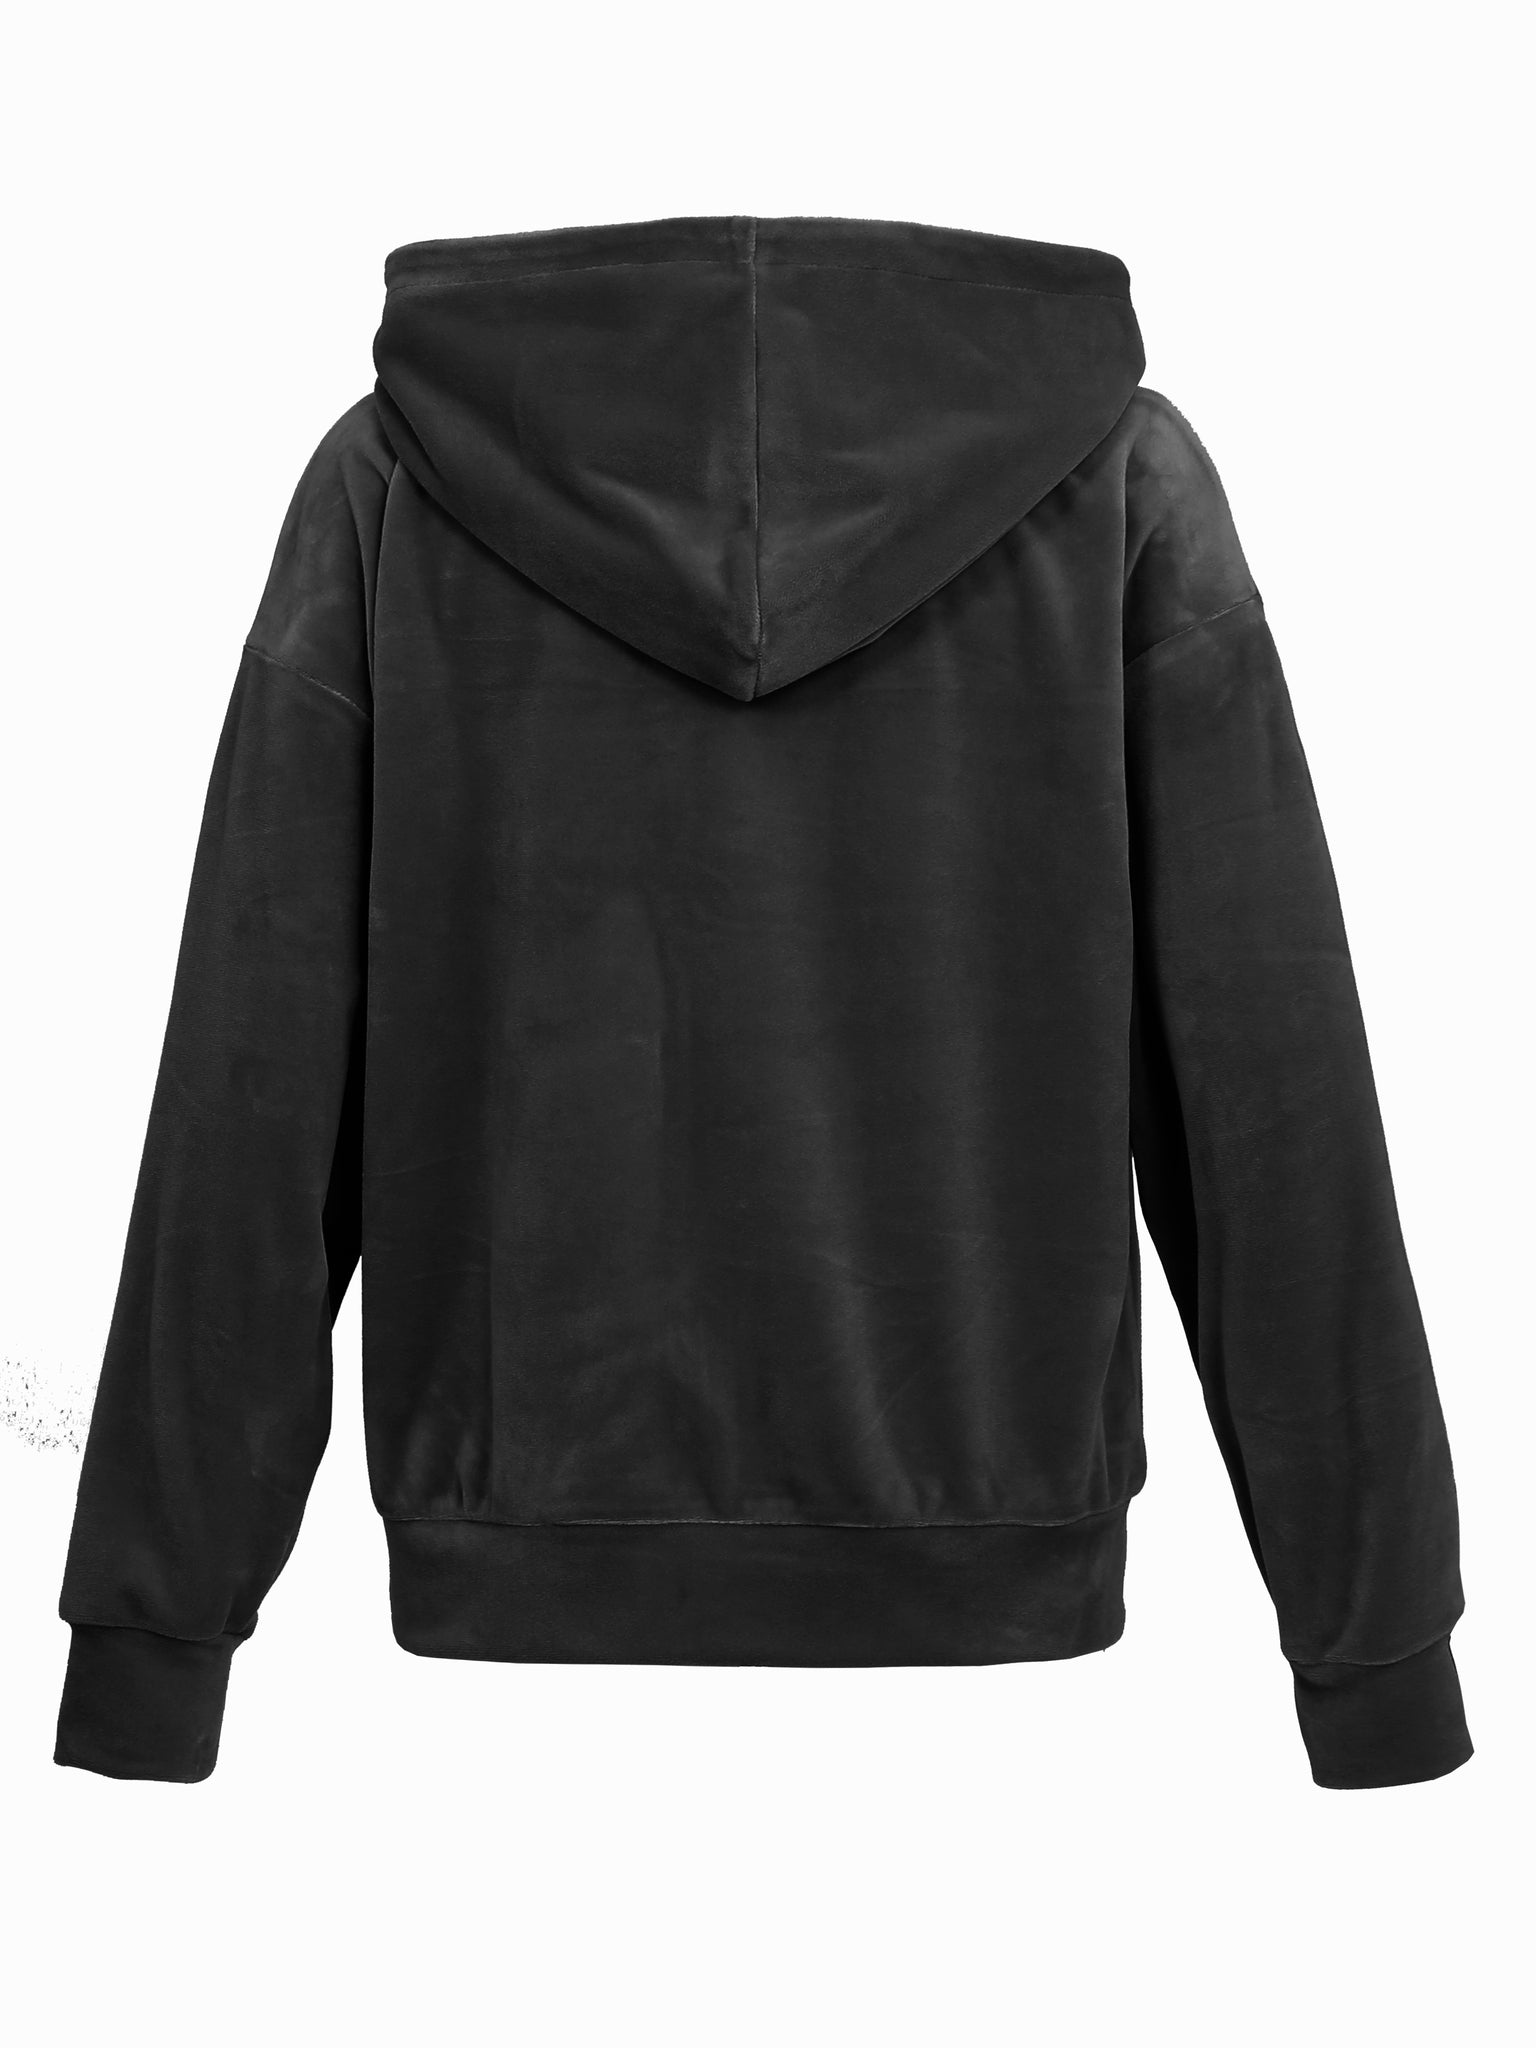 Velour hoodie for girls